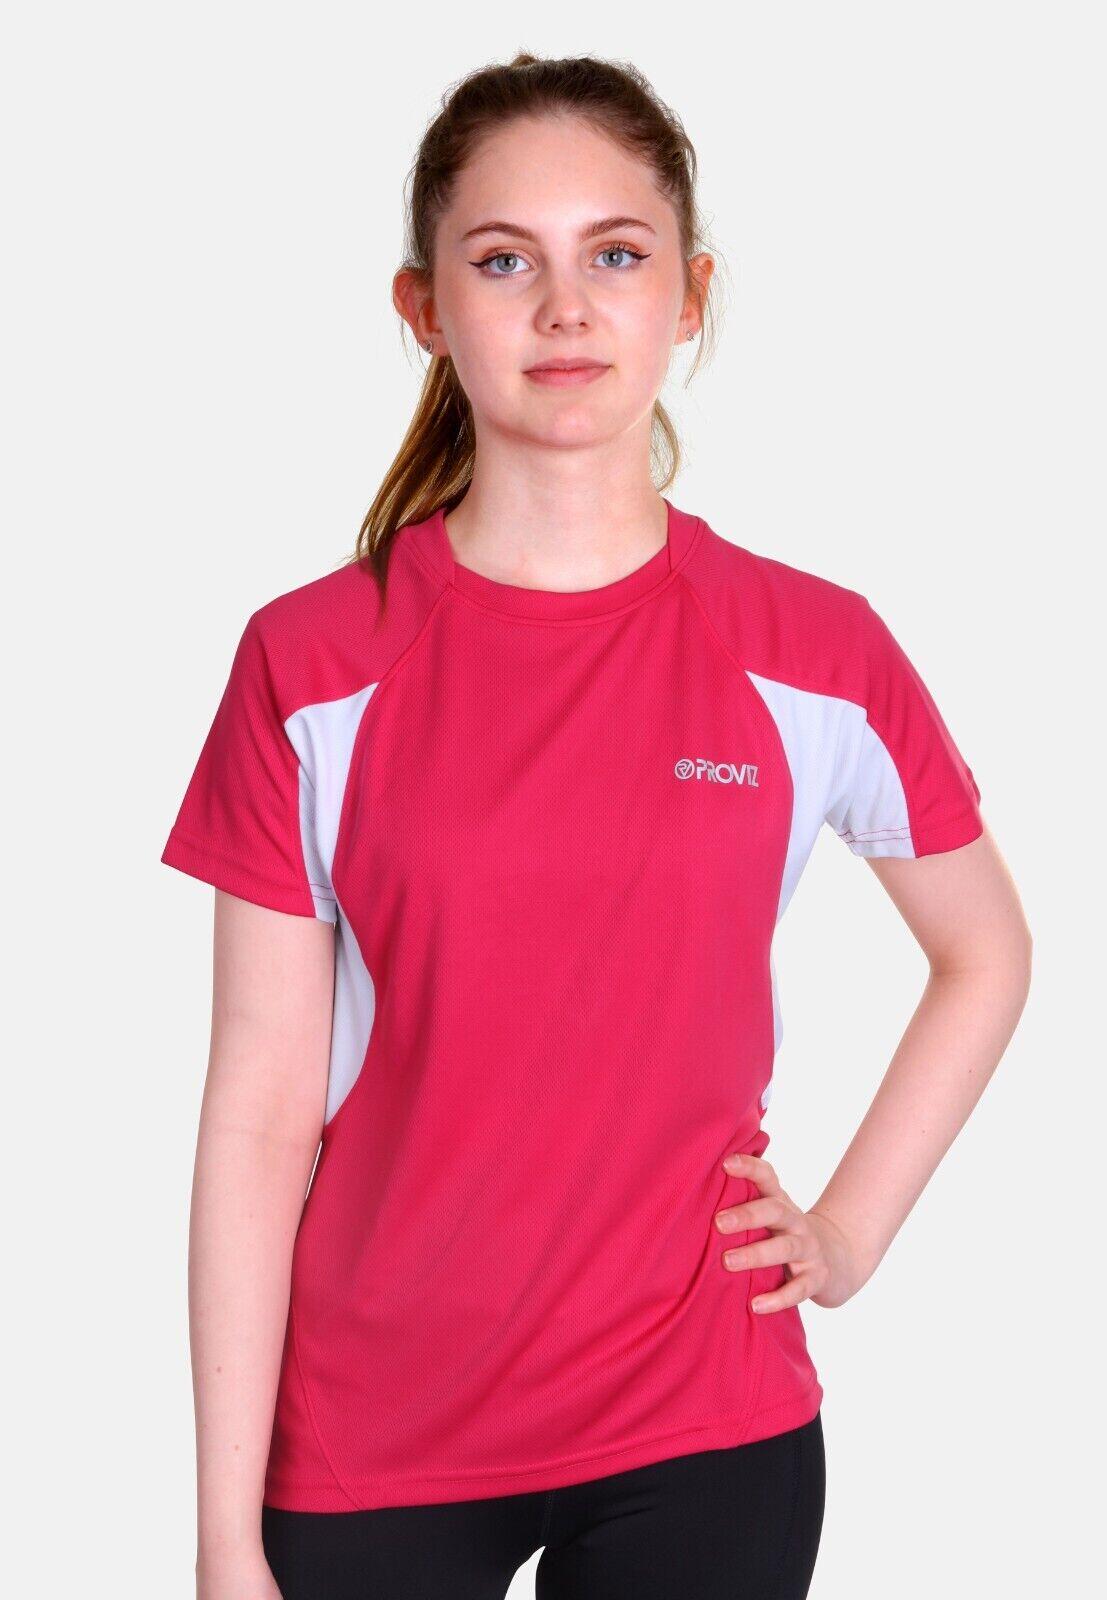 PROVIZ Proviz Classic Womens Sports T-Shirt Short Sleeve Reflective Activewear Top